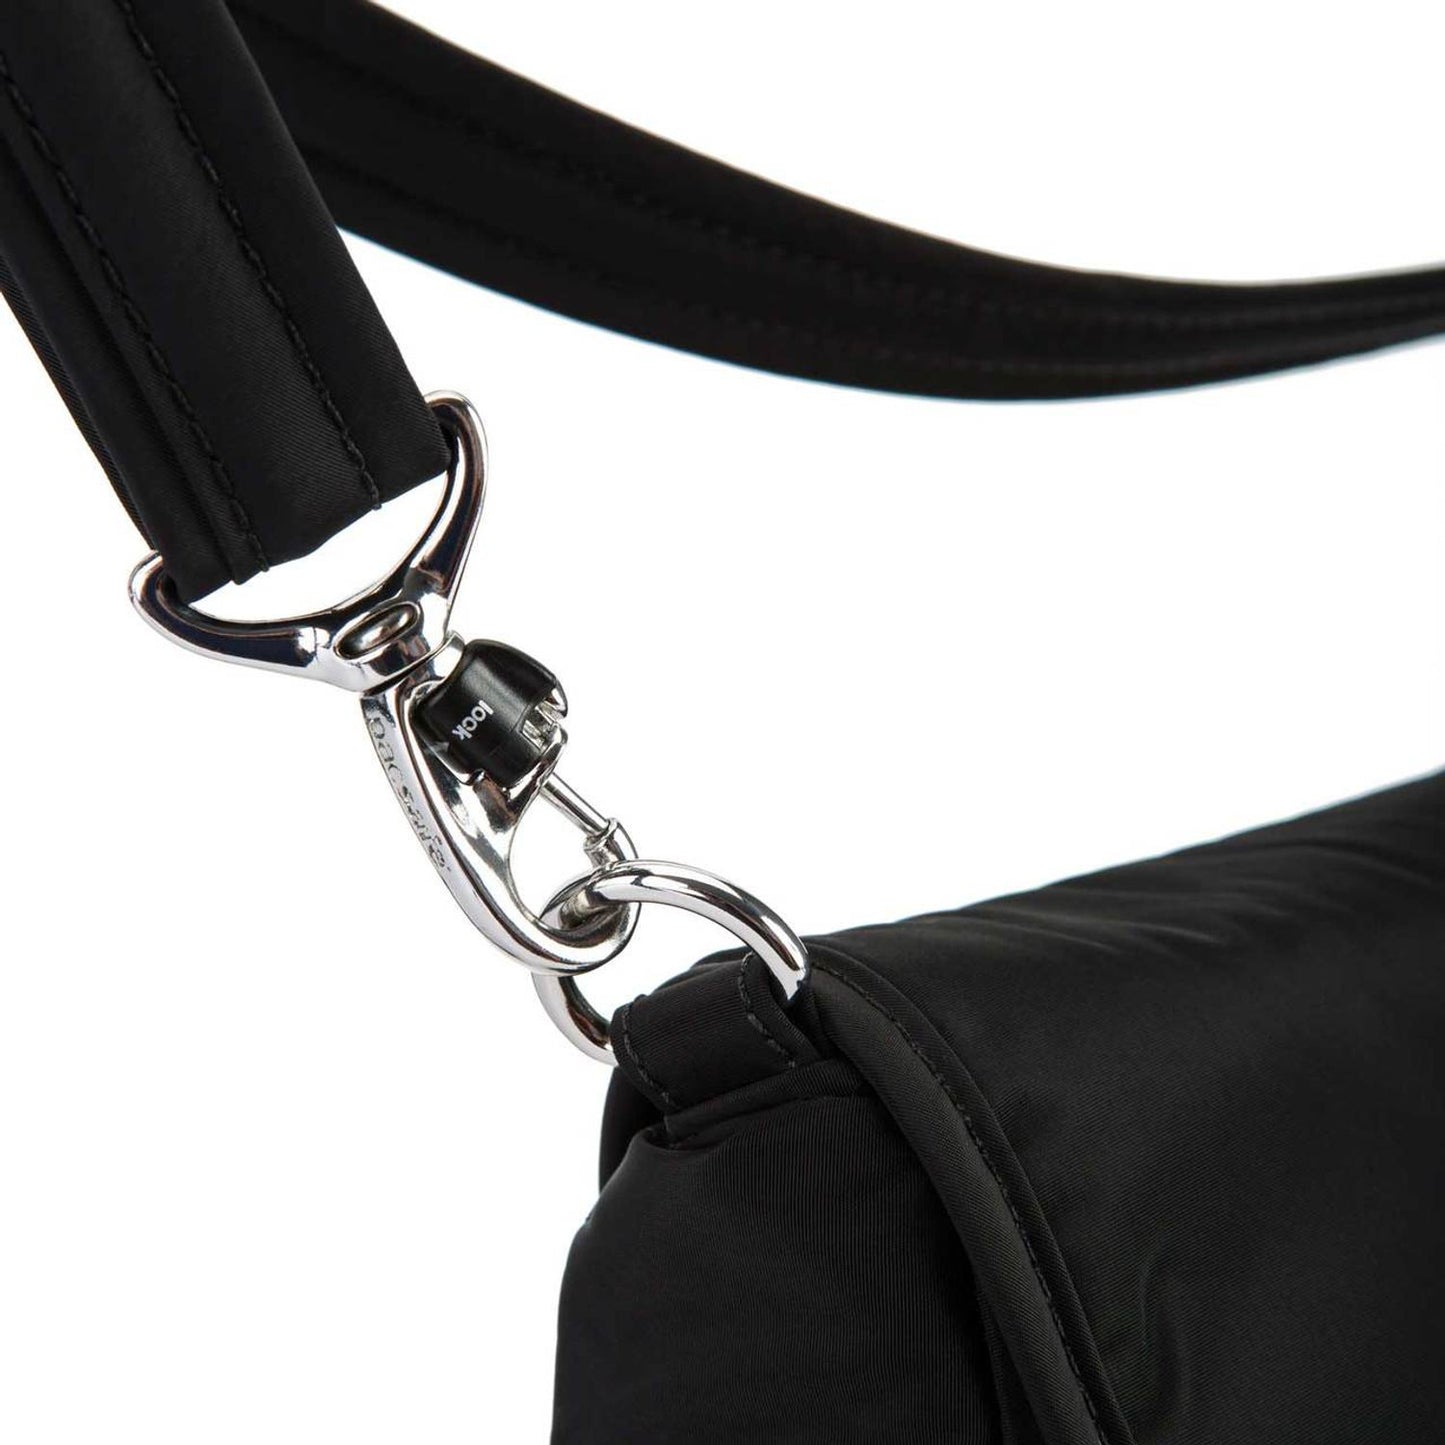 Pacsafe Stylesafe Crossbody anti-theft handbag - Black